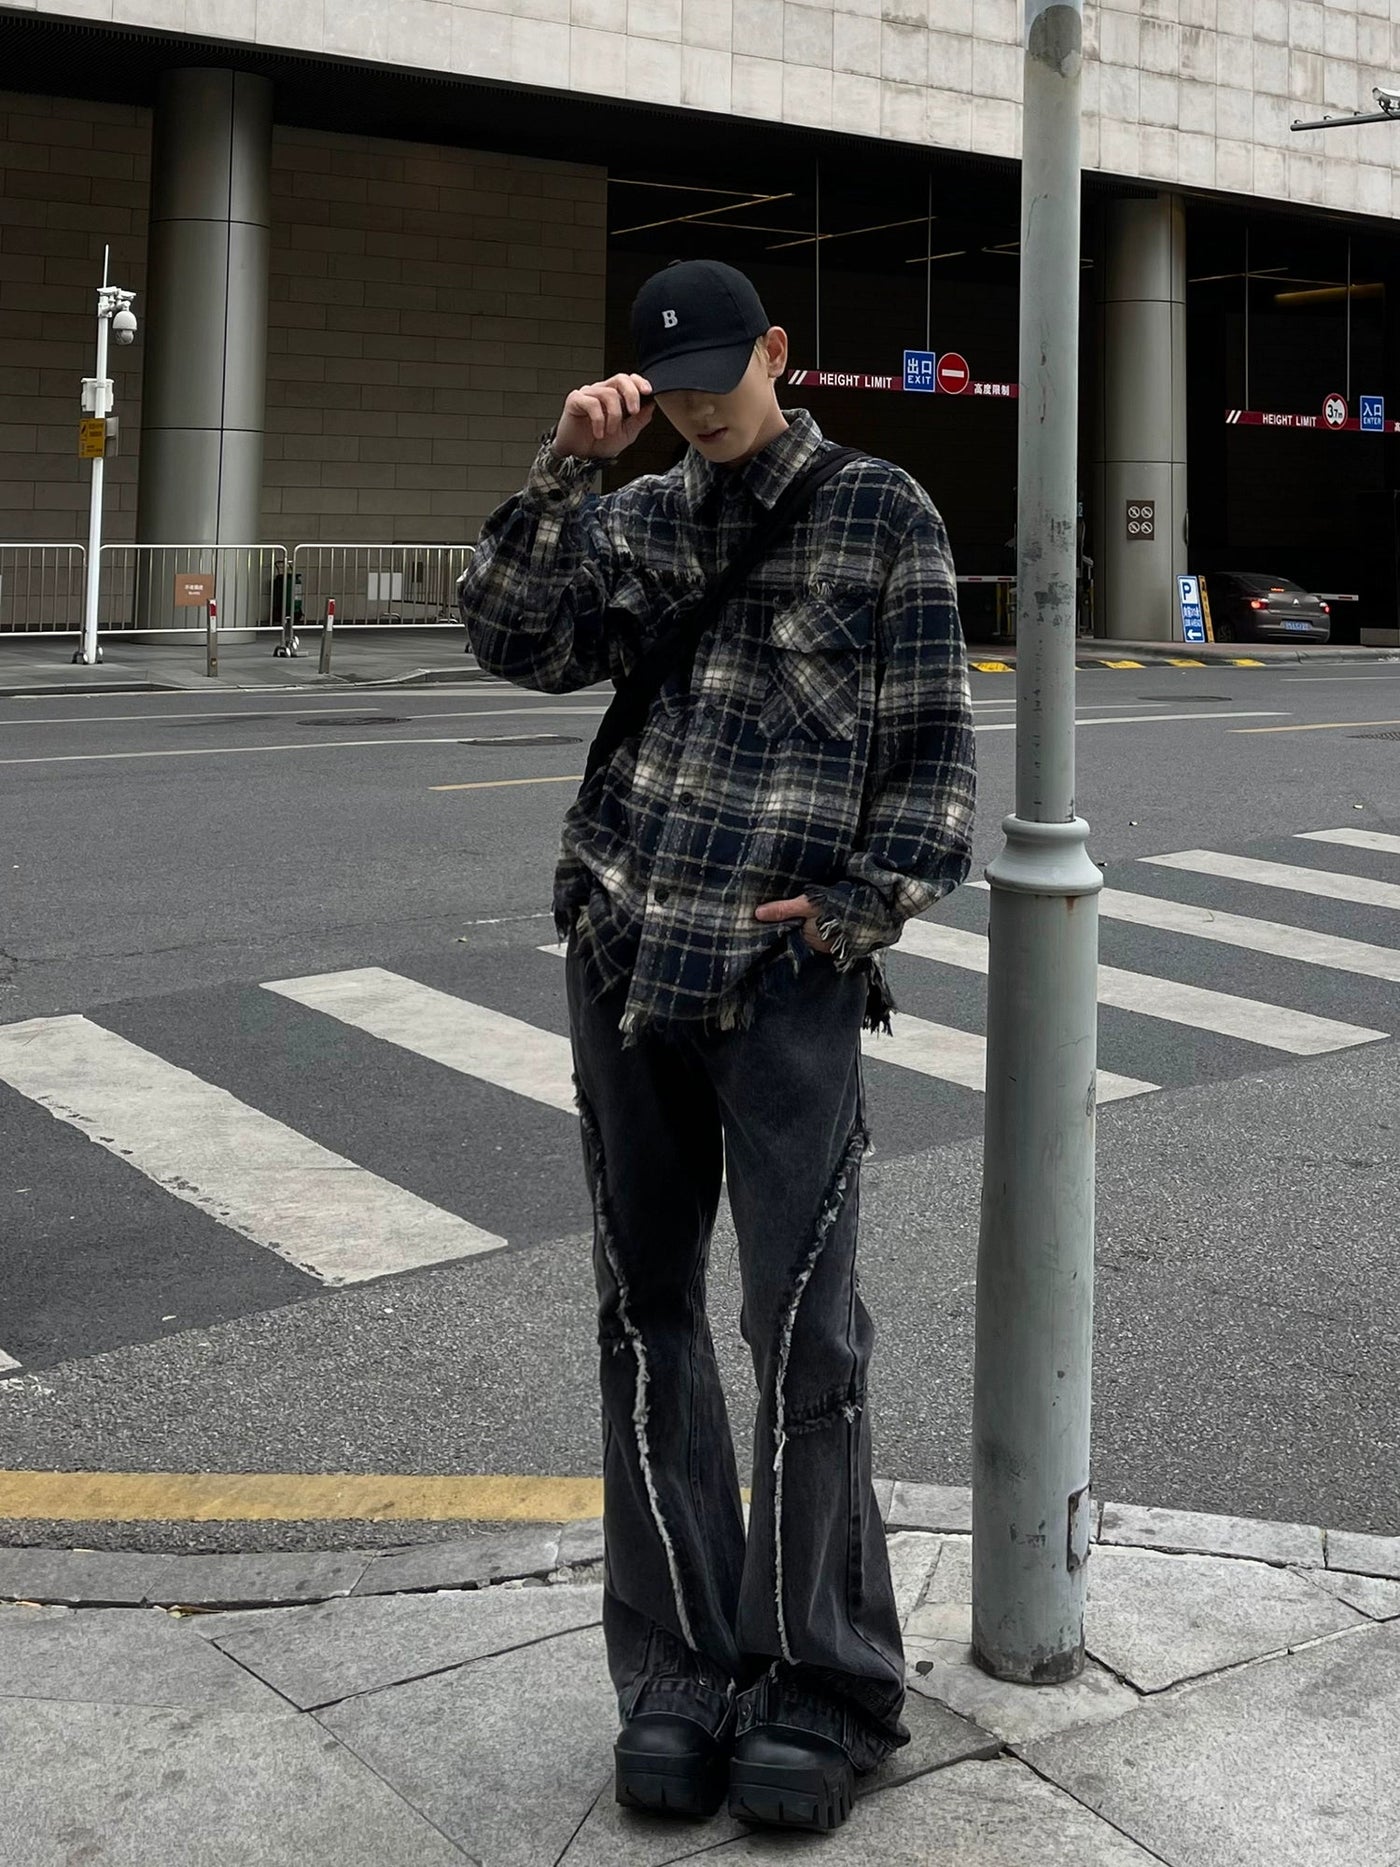 Plaid Raw Hem Shirt Korean Street Fashion Shirt By MaxDstr Shop Online at OH Vault